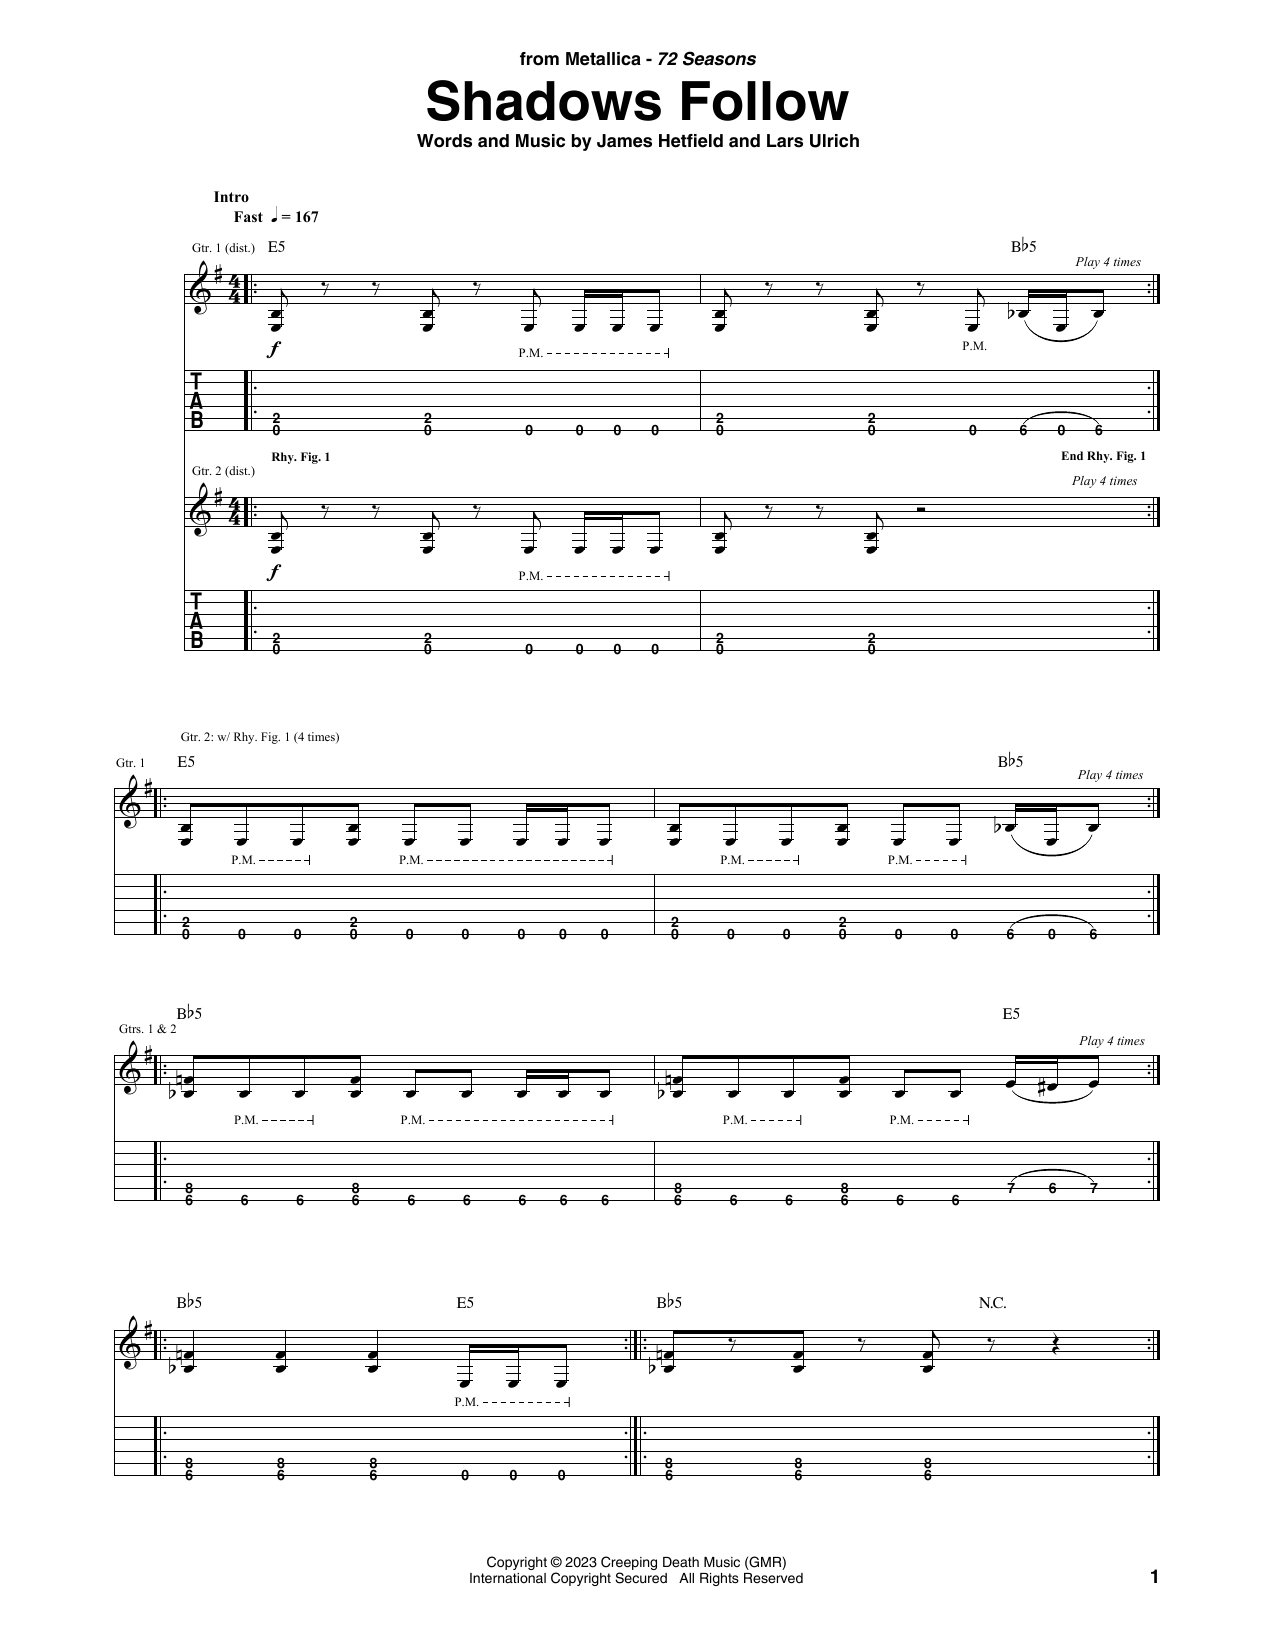 Metallica Shadows Follow Sheet Music Notes & Chords for Guitar Tab - Download or Print PDF